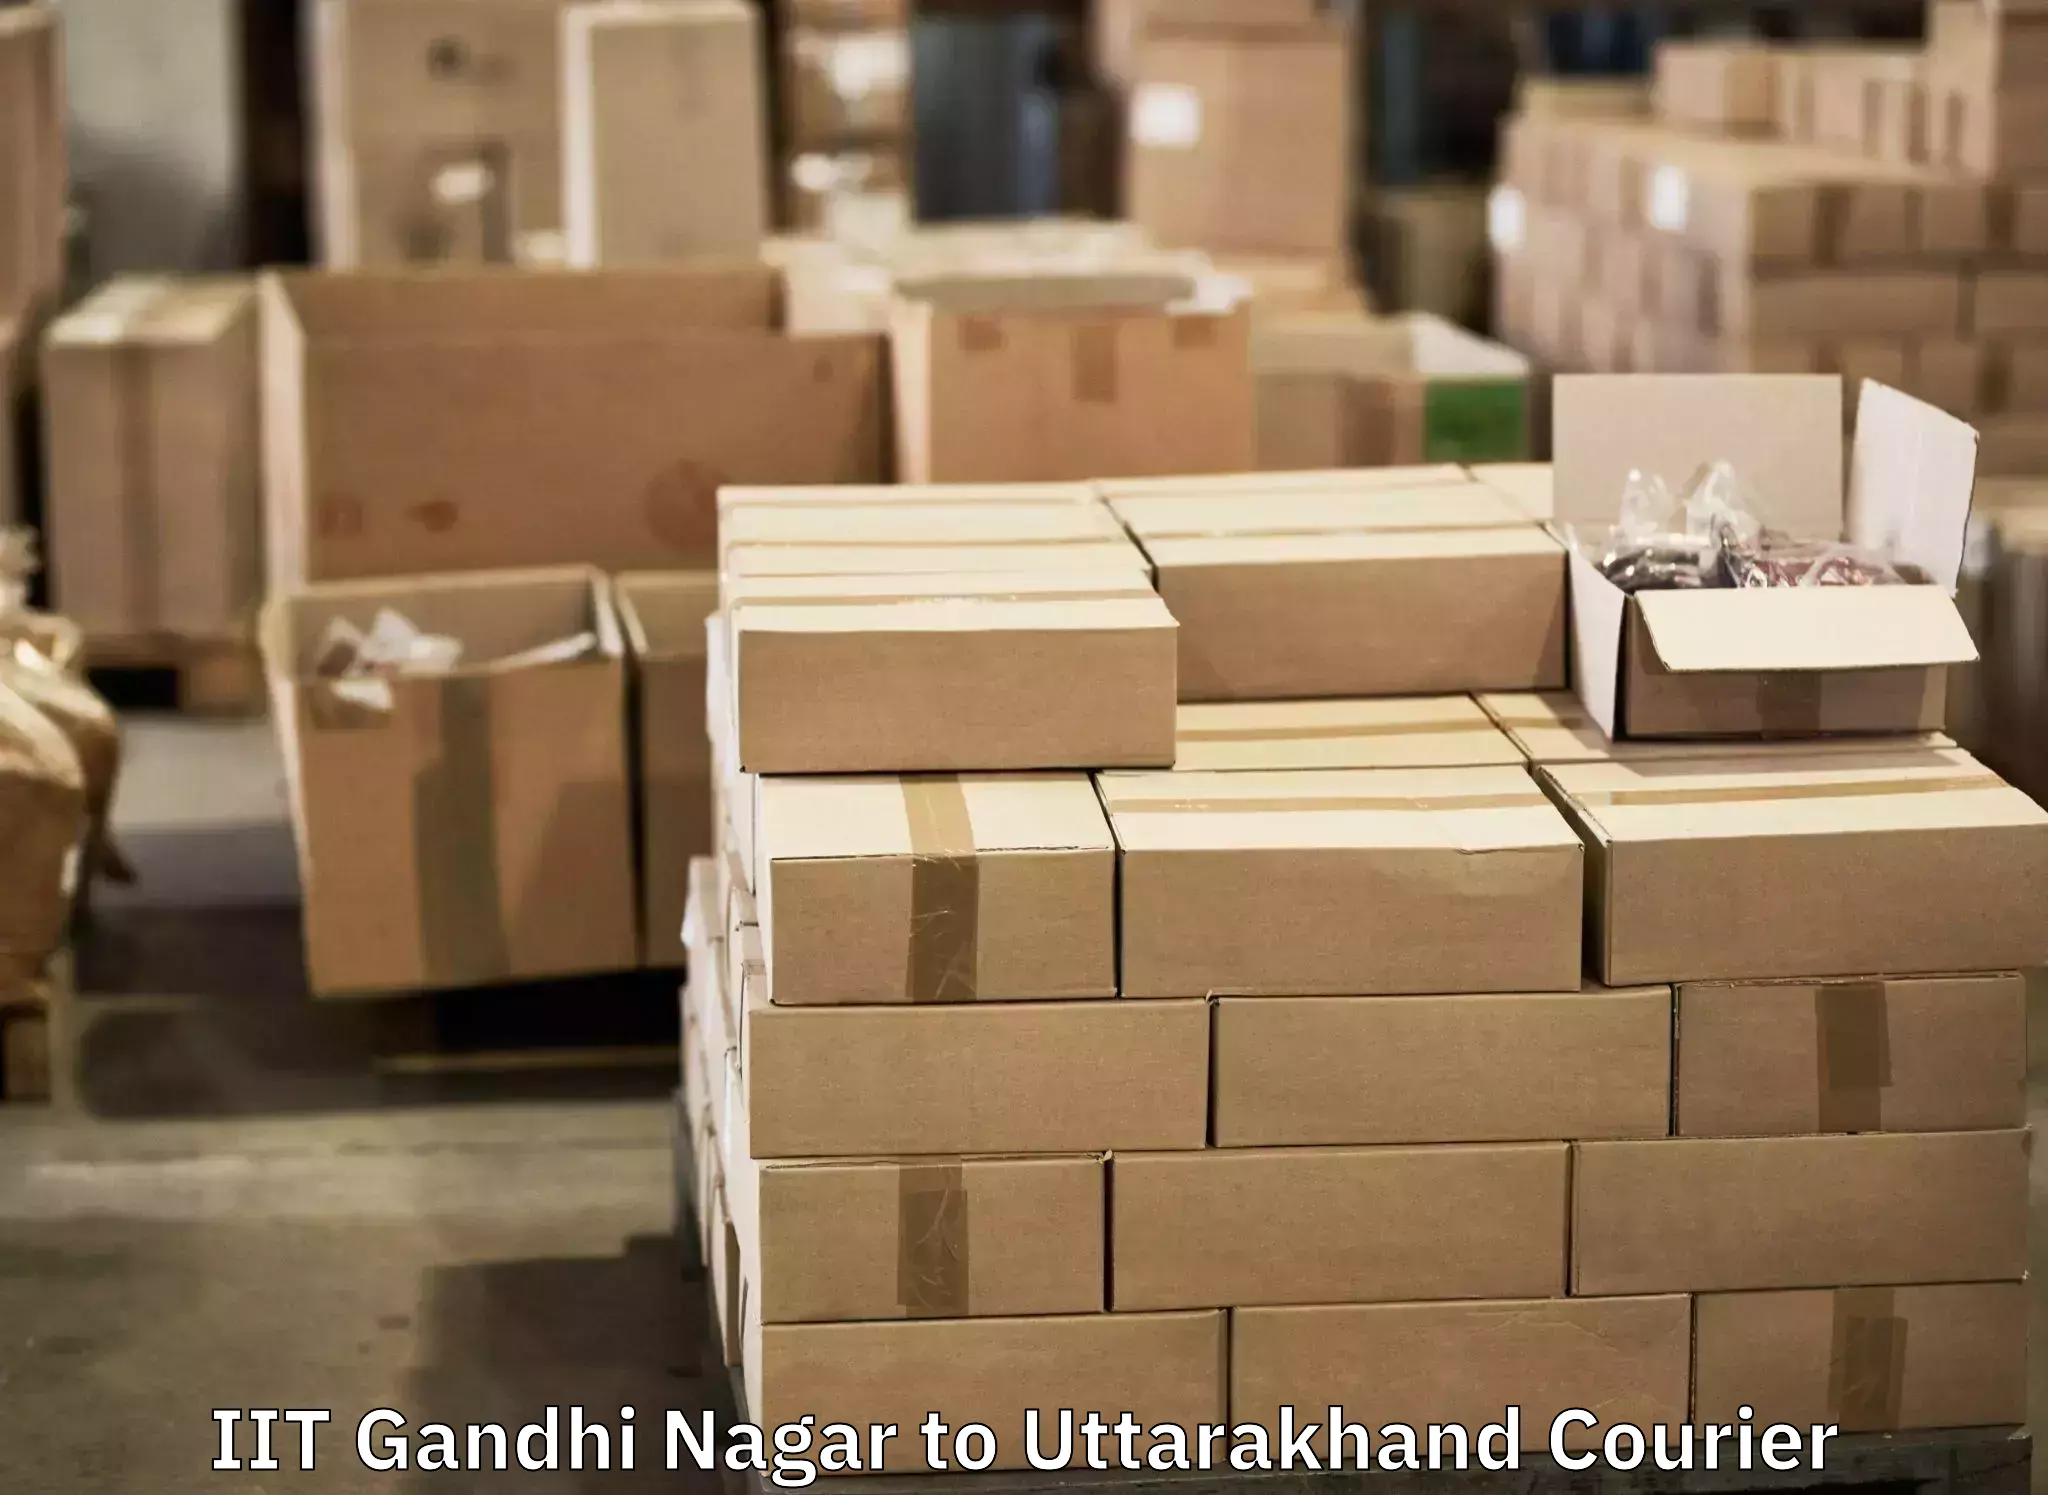 Baggage relocation service IIT Gandhi Nagar to Ramnagar